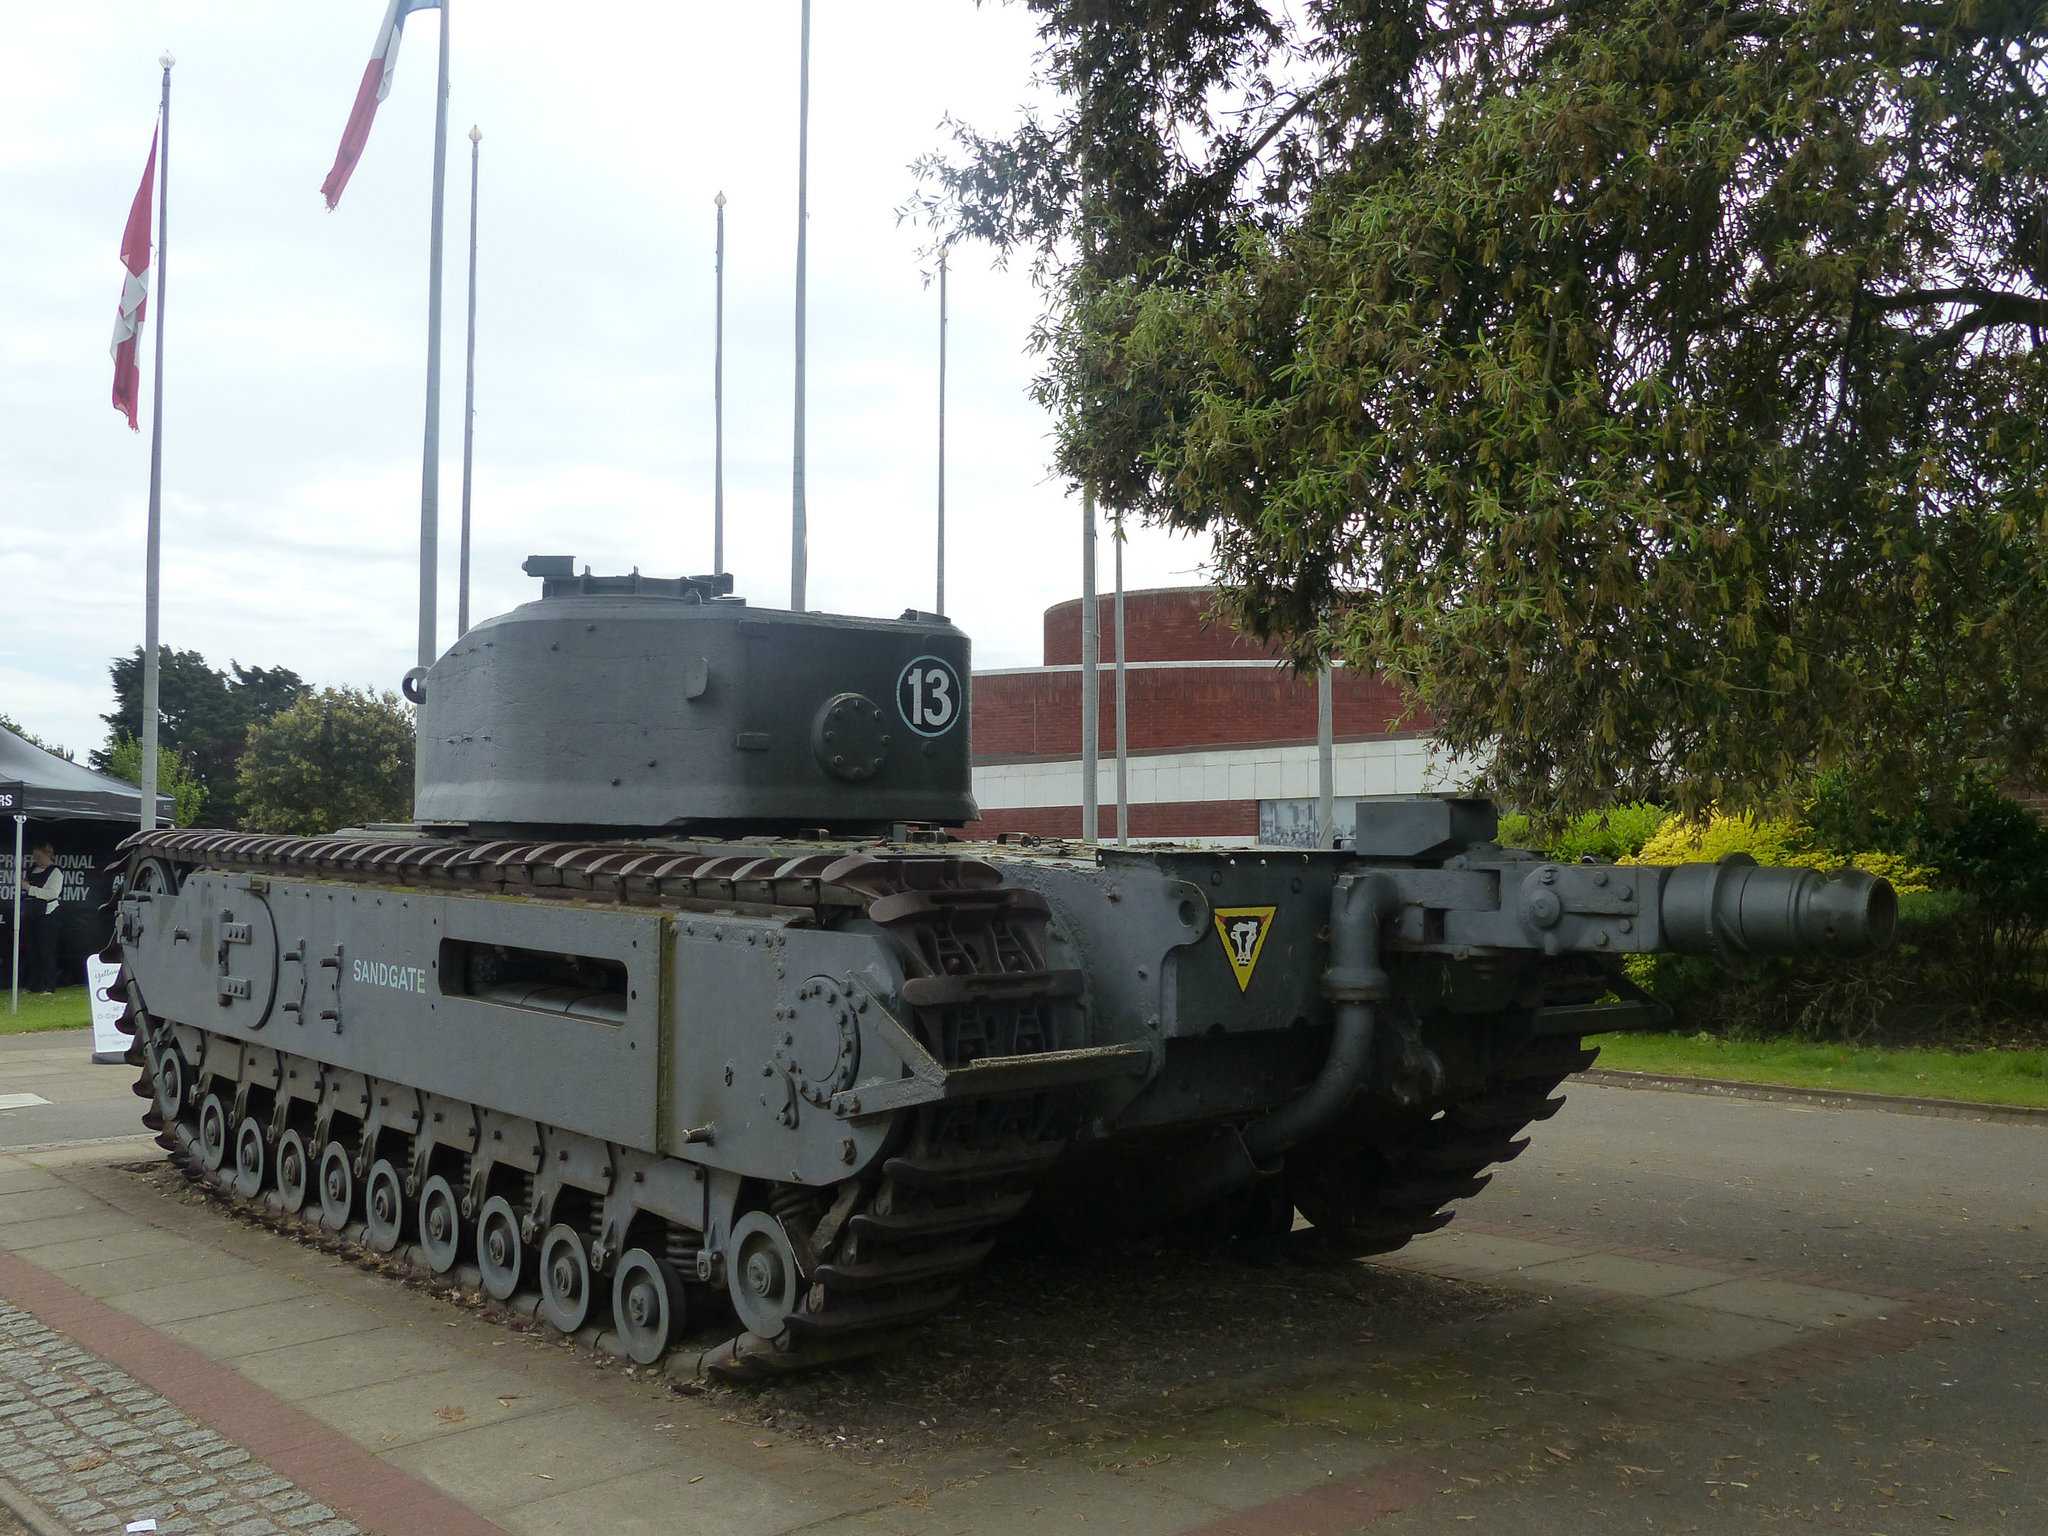 Churchill Tank (1) - 2 June 2014